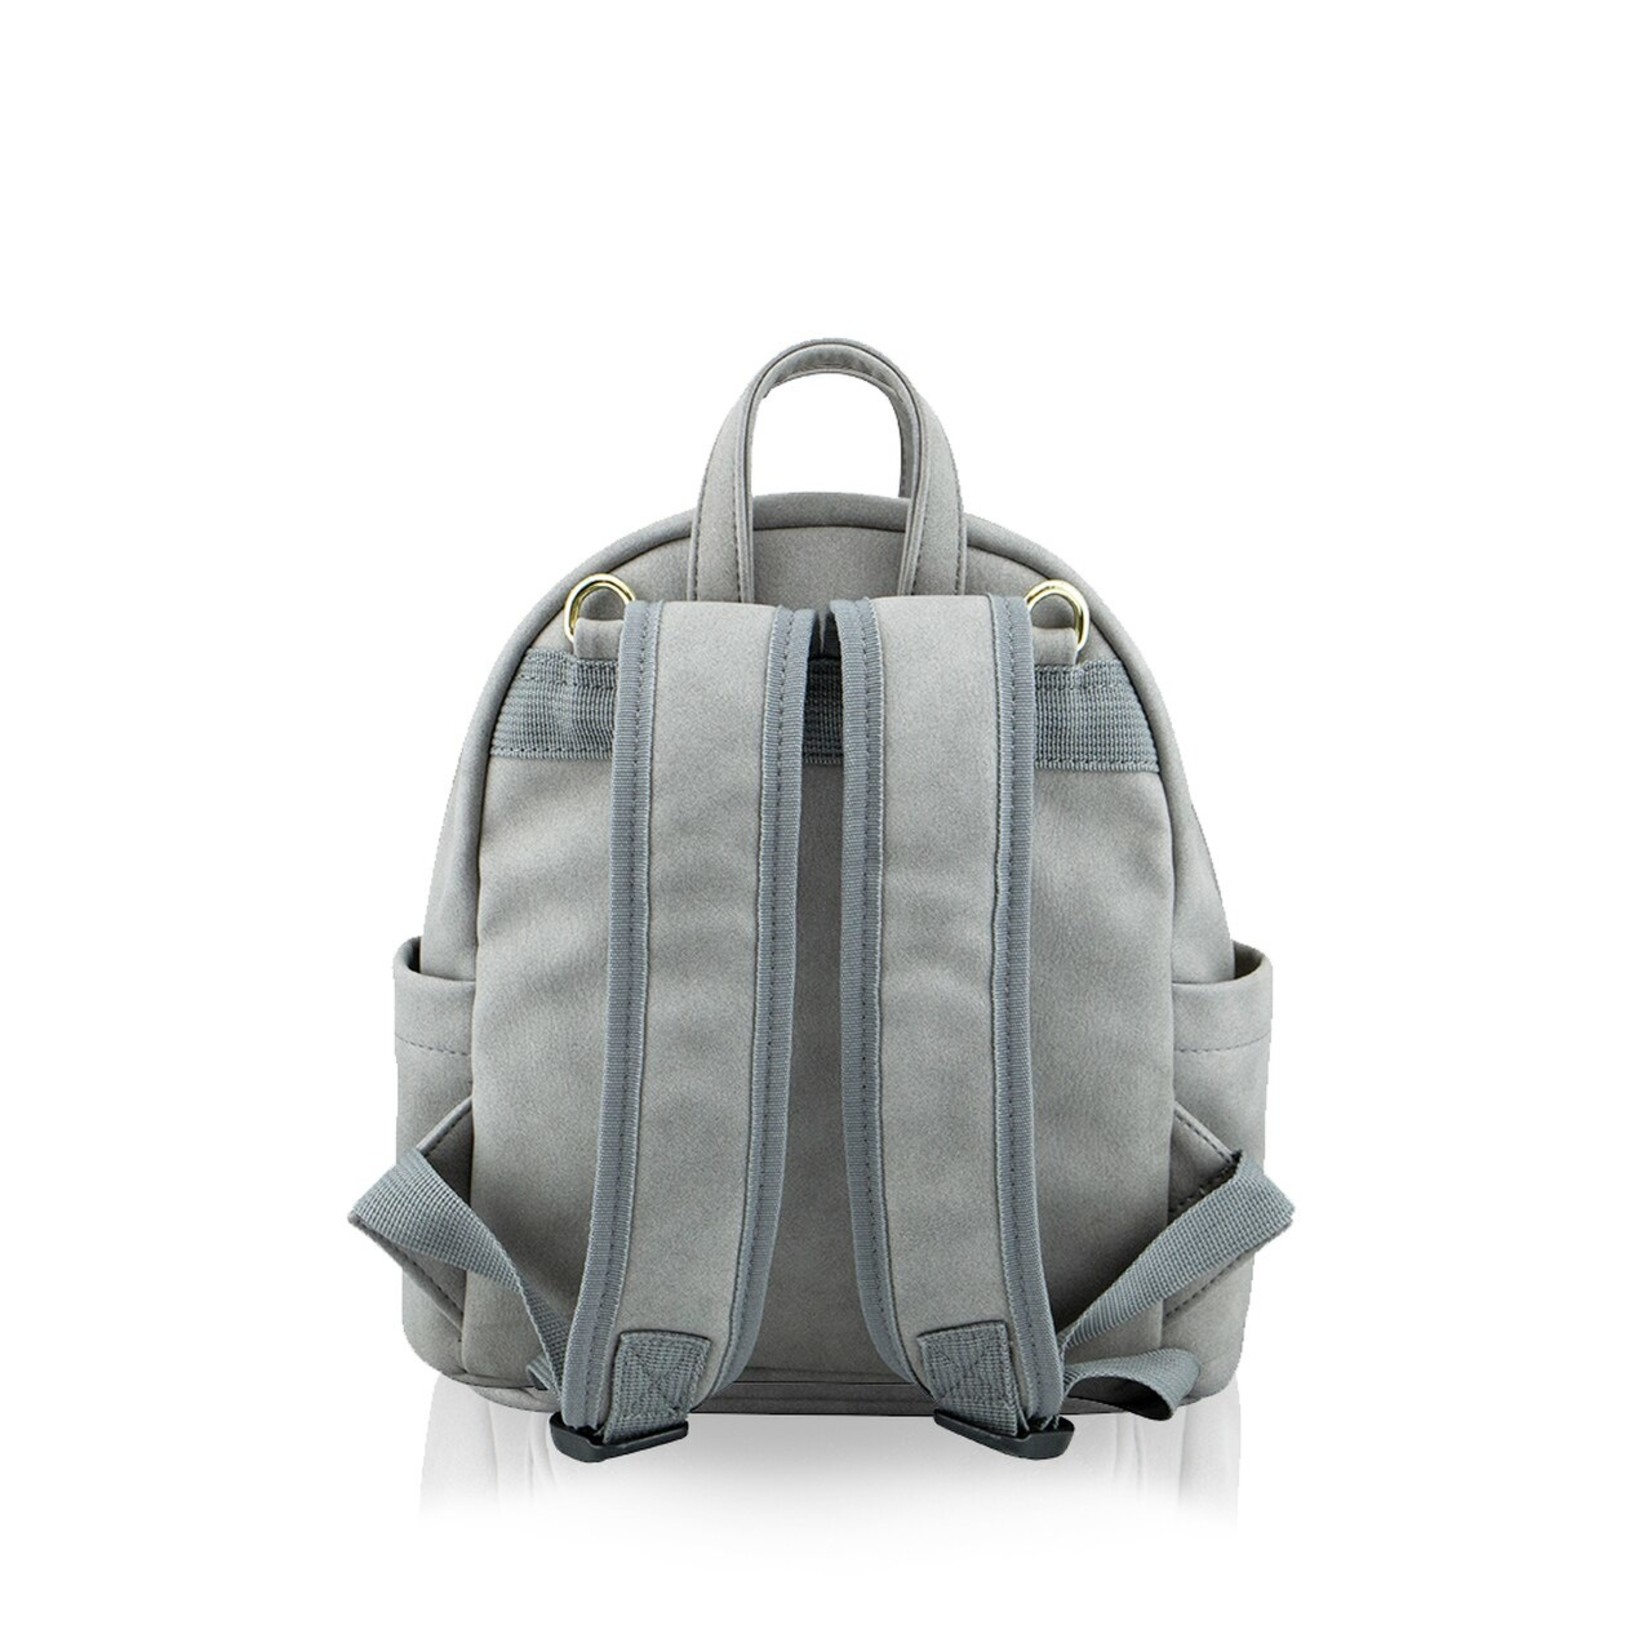 Isoki Mini Marlo Backpack